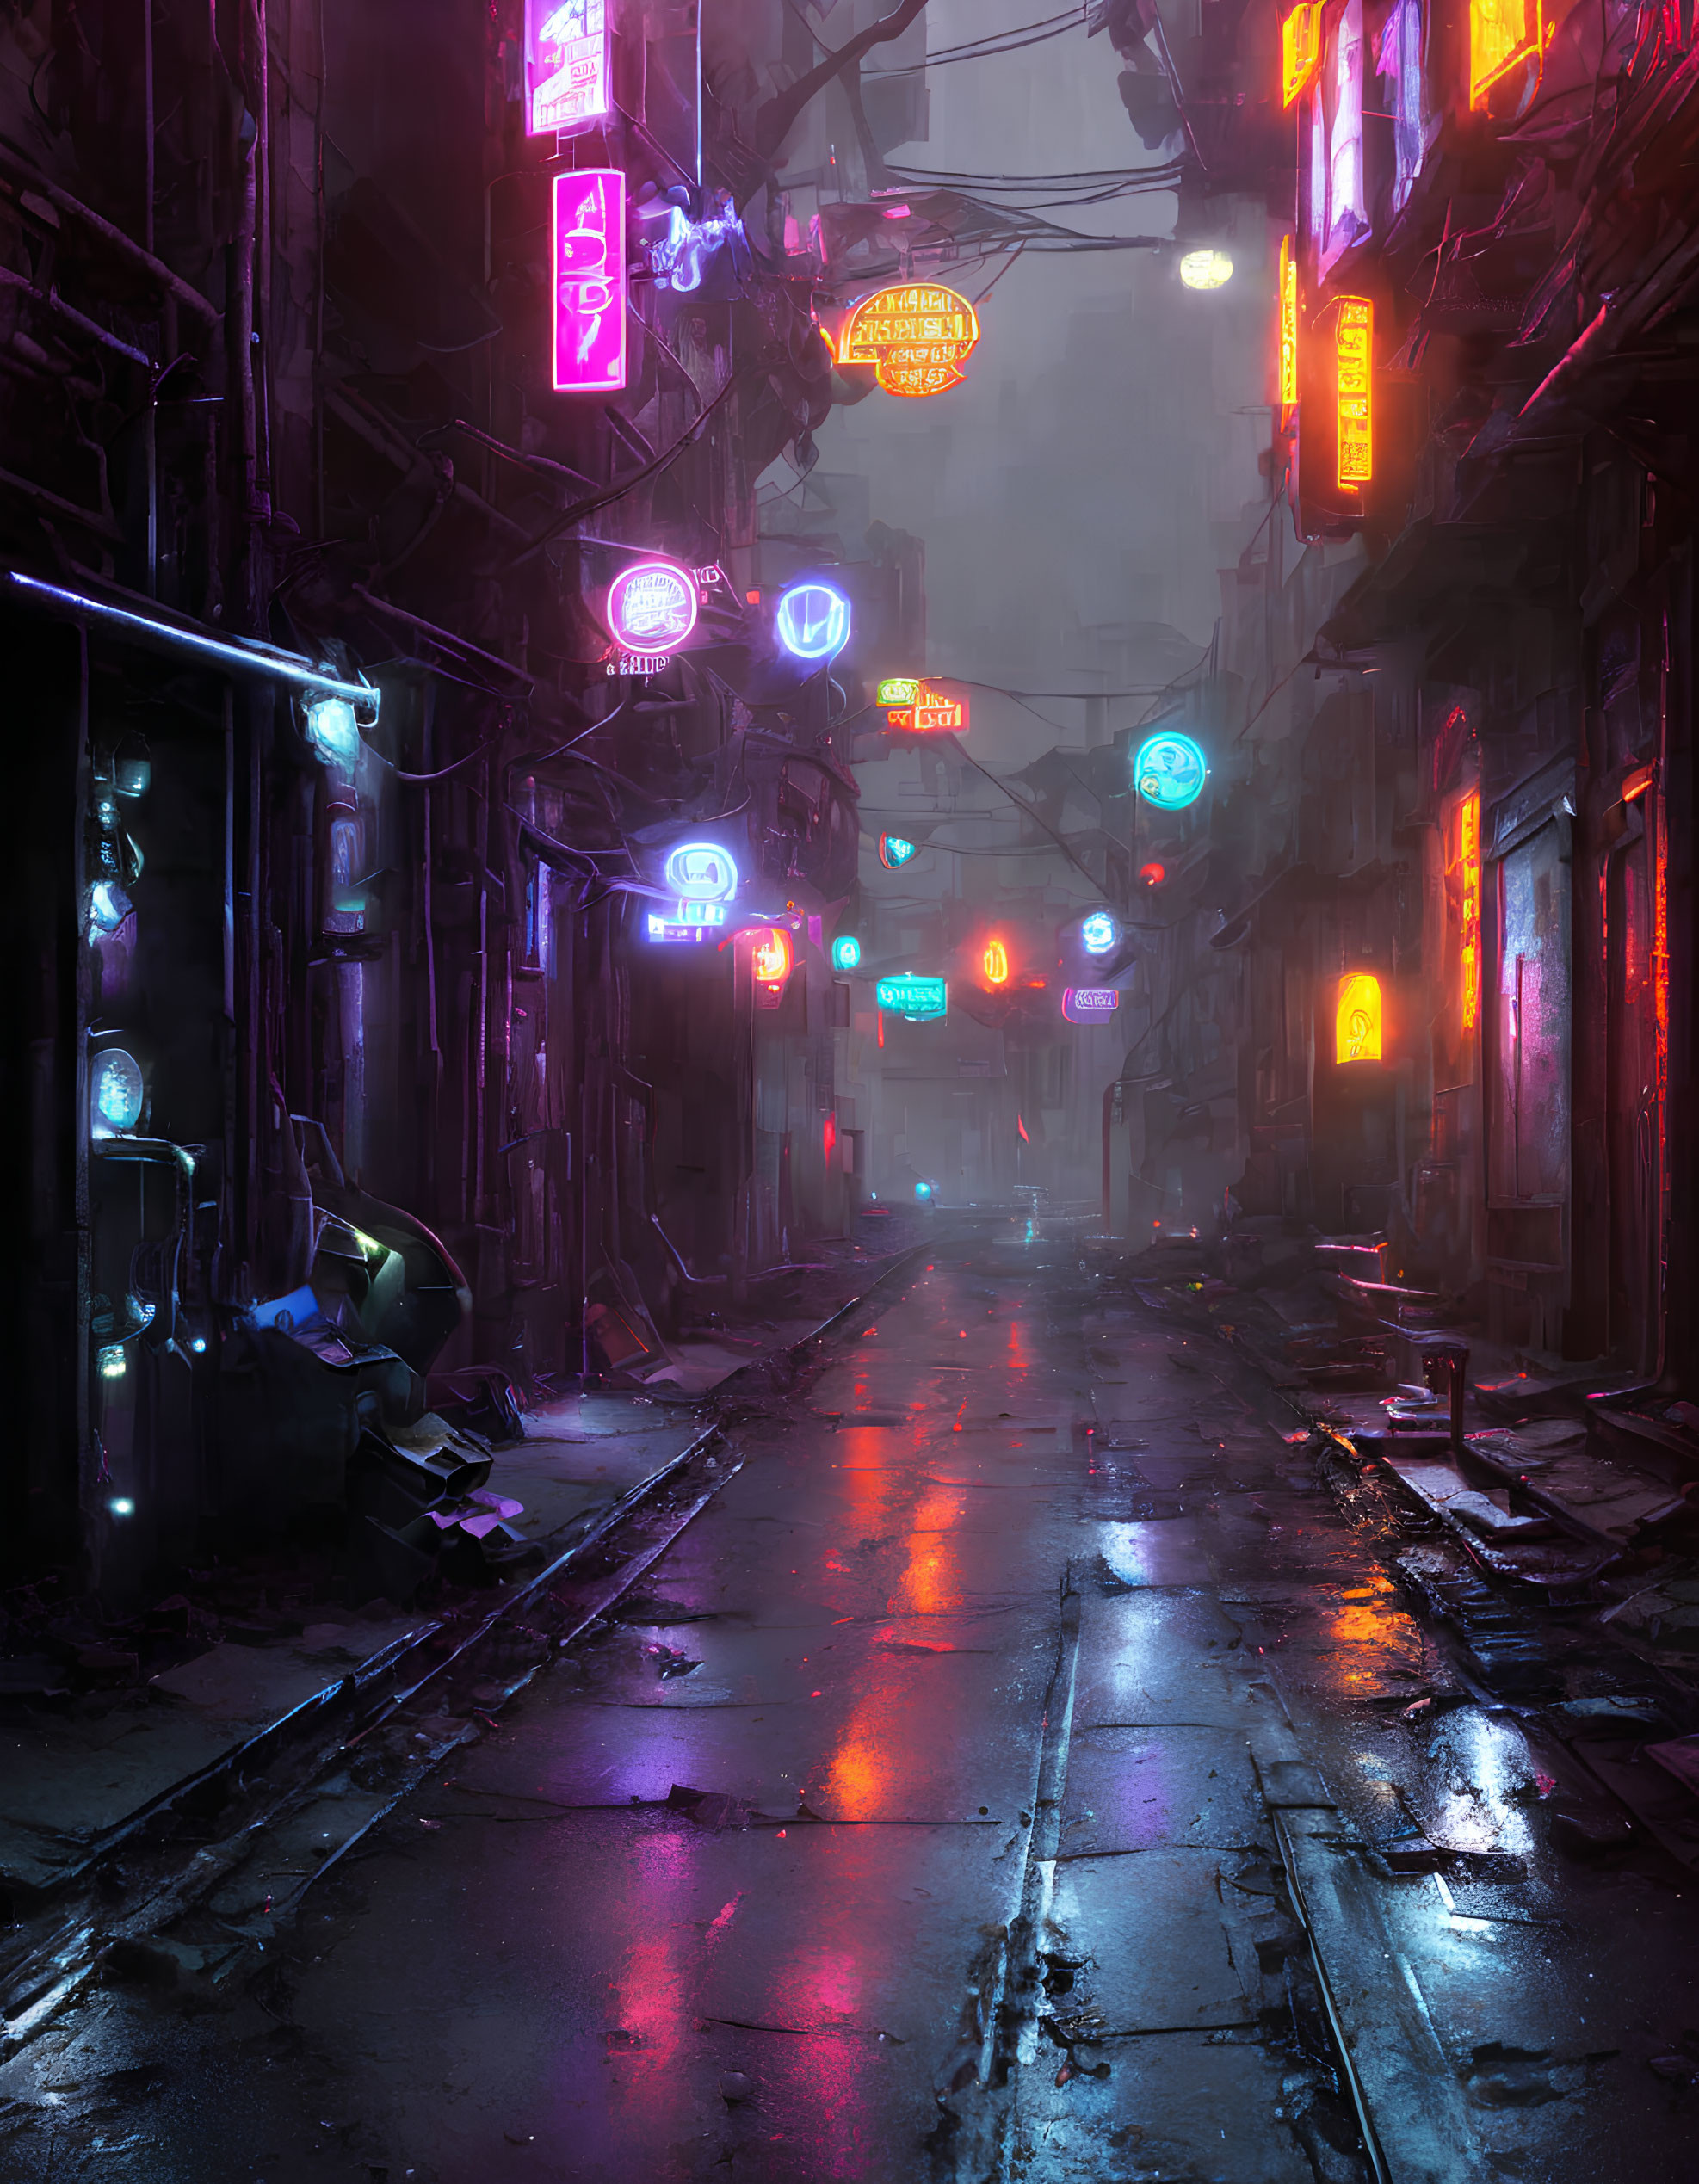 Urban alleyway with neon lights and wet cobblestones in futuristic scene